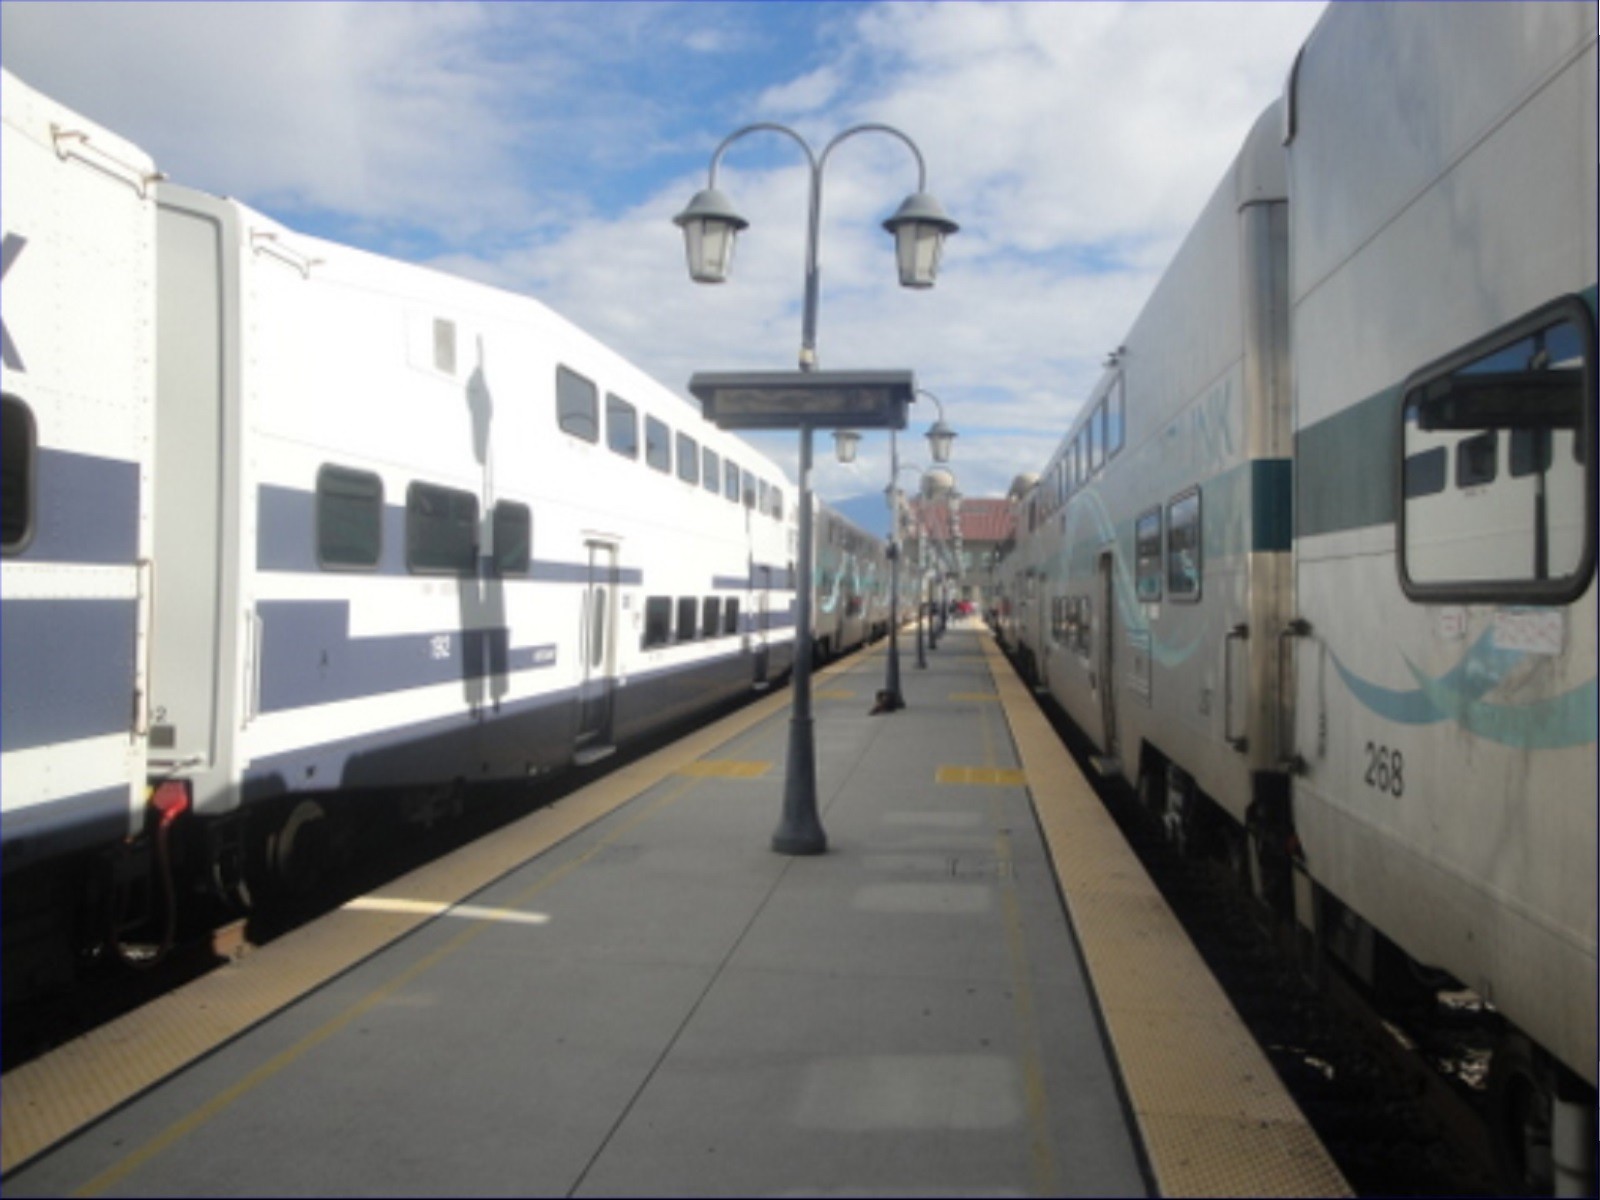 Foto: trenes en estación San Bernardino, fin del recorrido de este ramal - San Bernardino (California), Estados Unidos